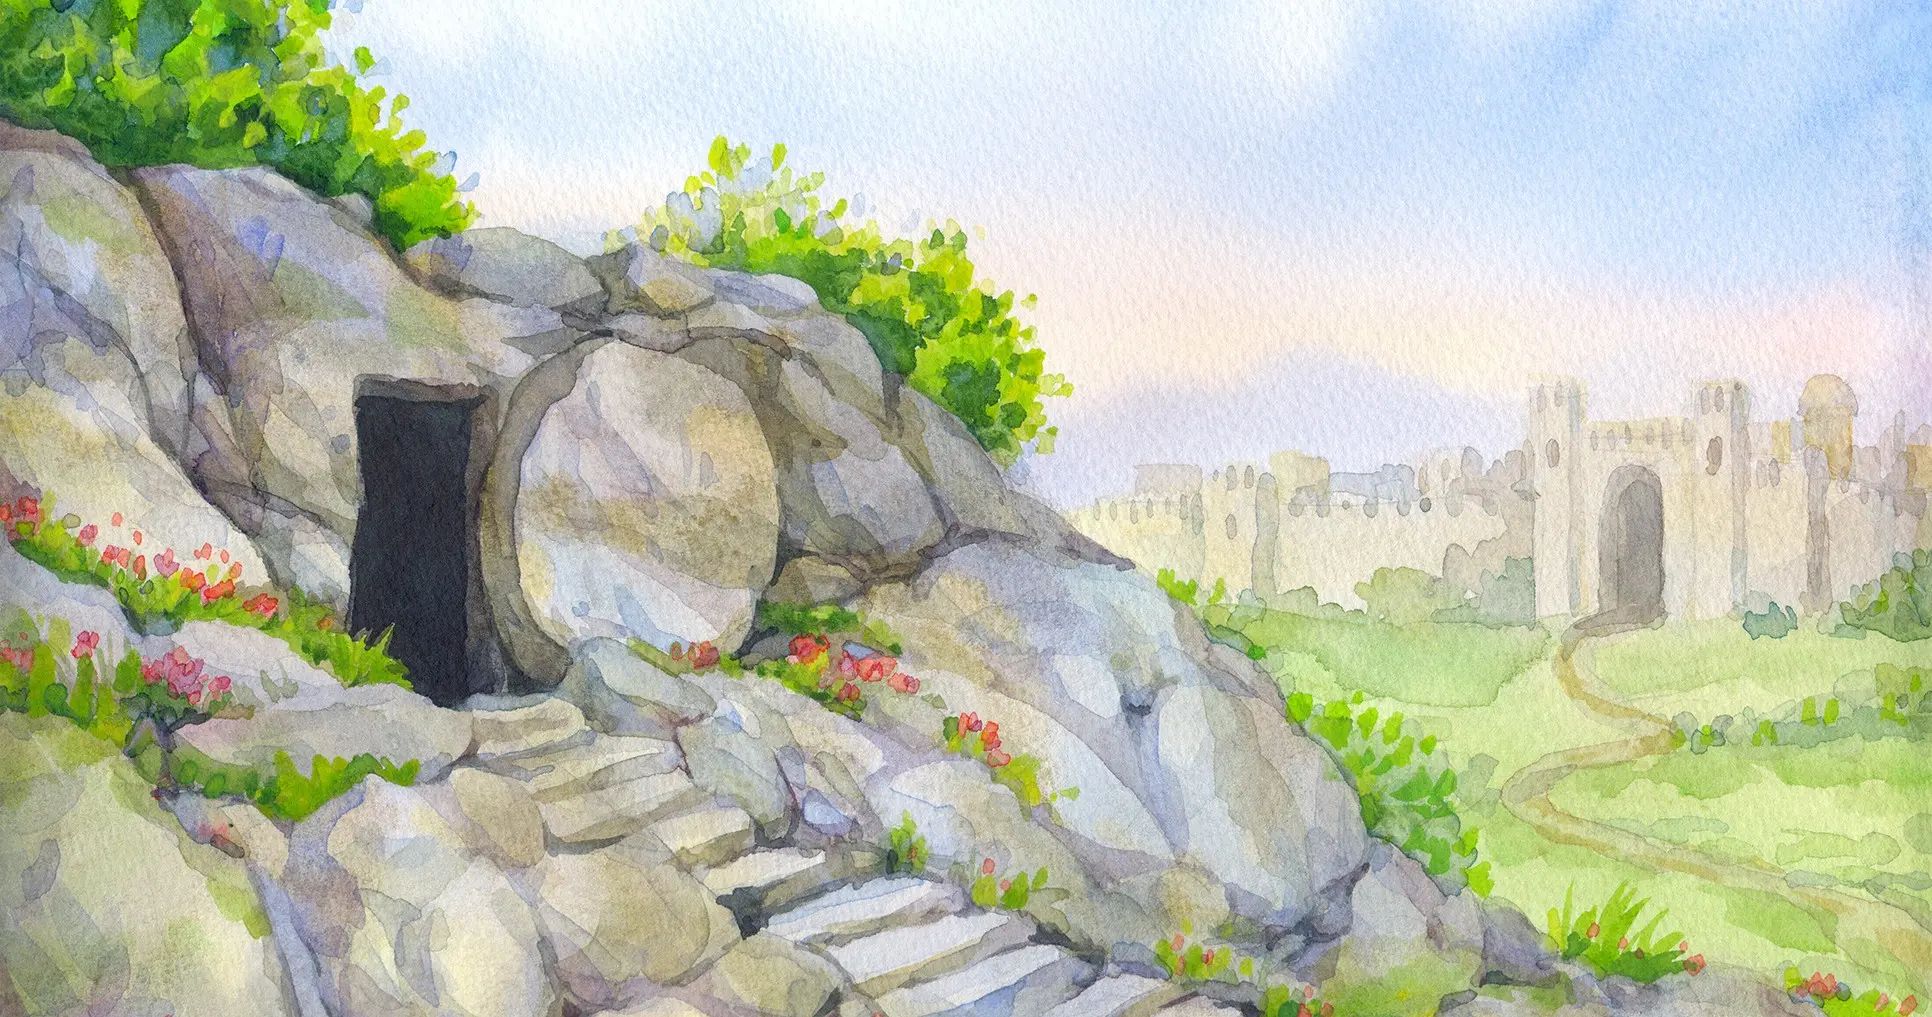 Illustration of the empty tomb by Maryna Kriuchenko. Image via Church of Jesus Christ.